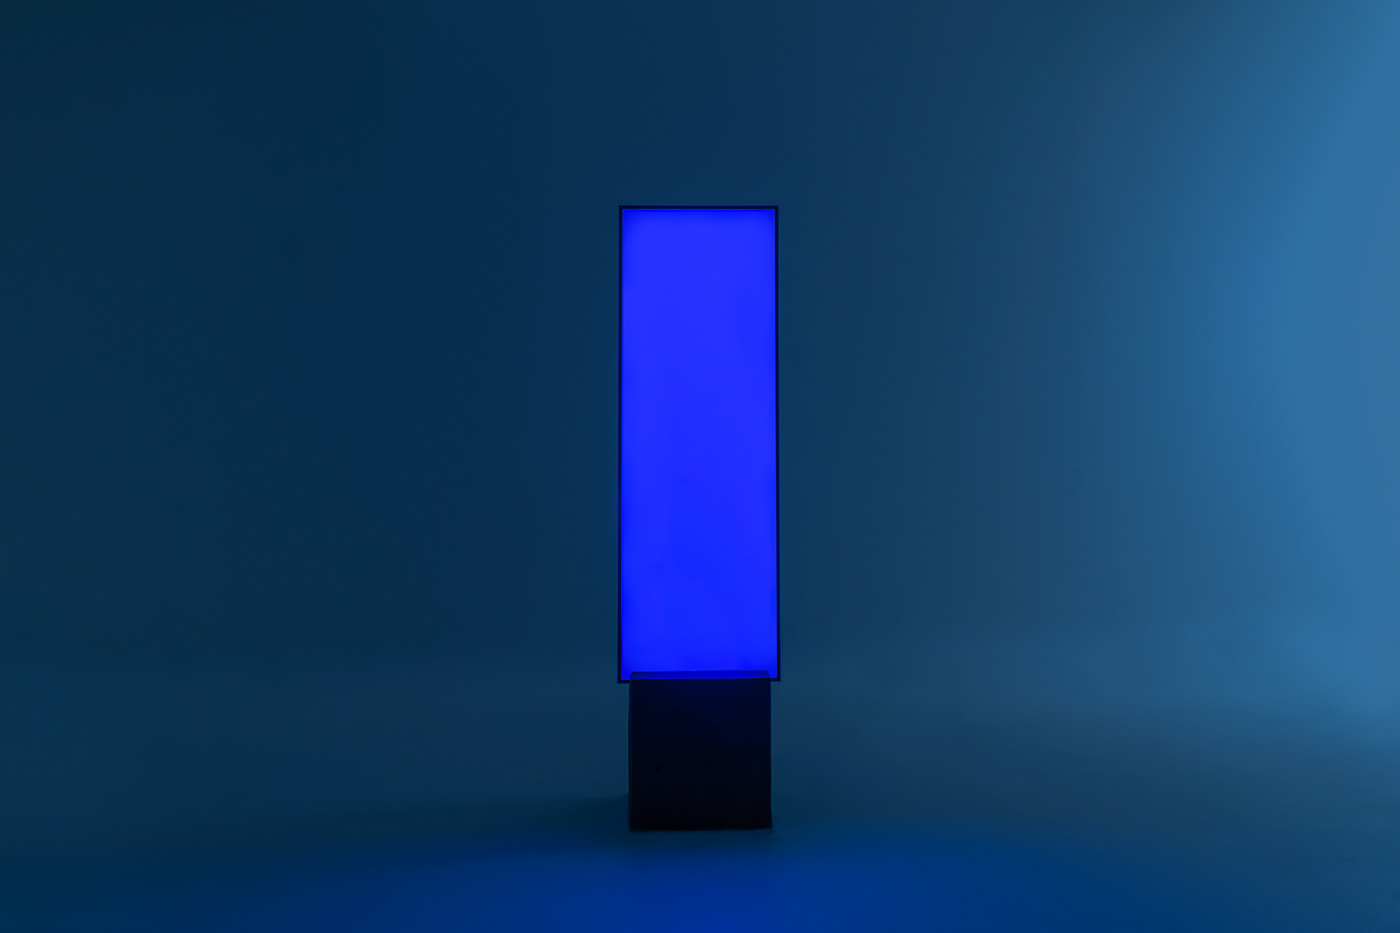 Korea Lamp led mirror object Christian product light Lux modeling rendering